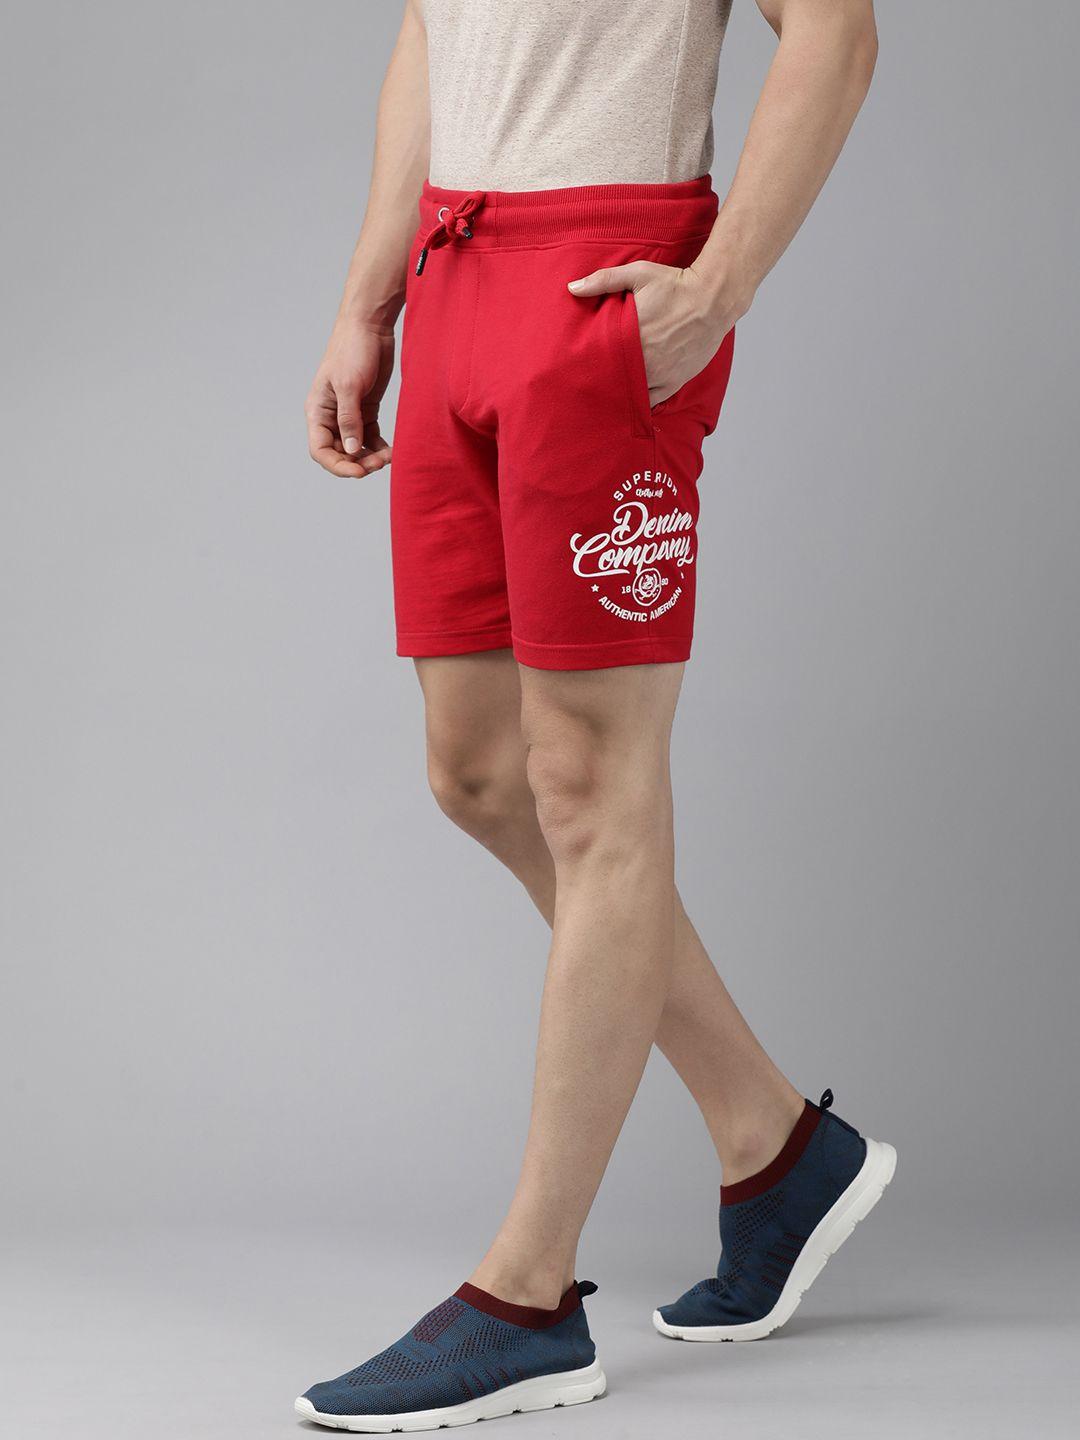 u s polo assn denim co men red brand logo printed shorts